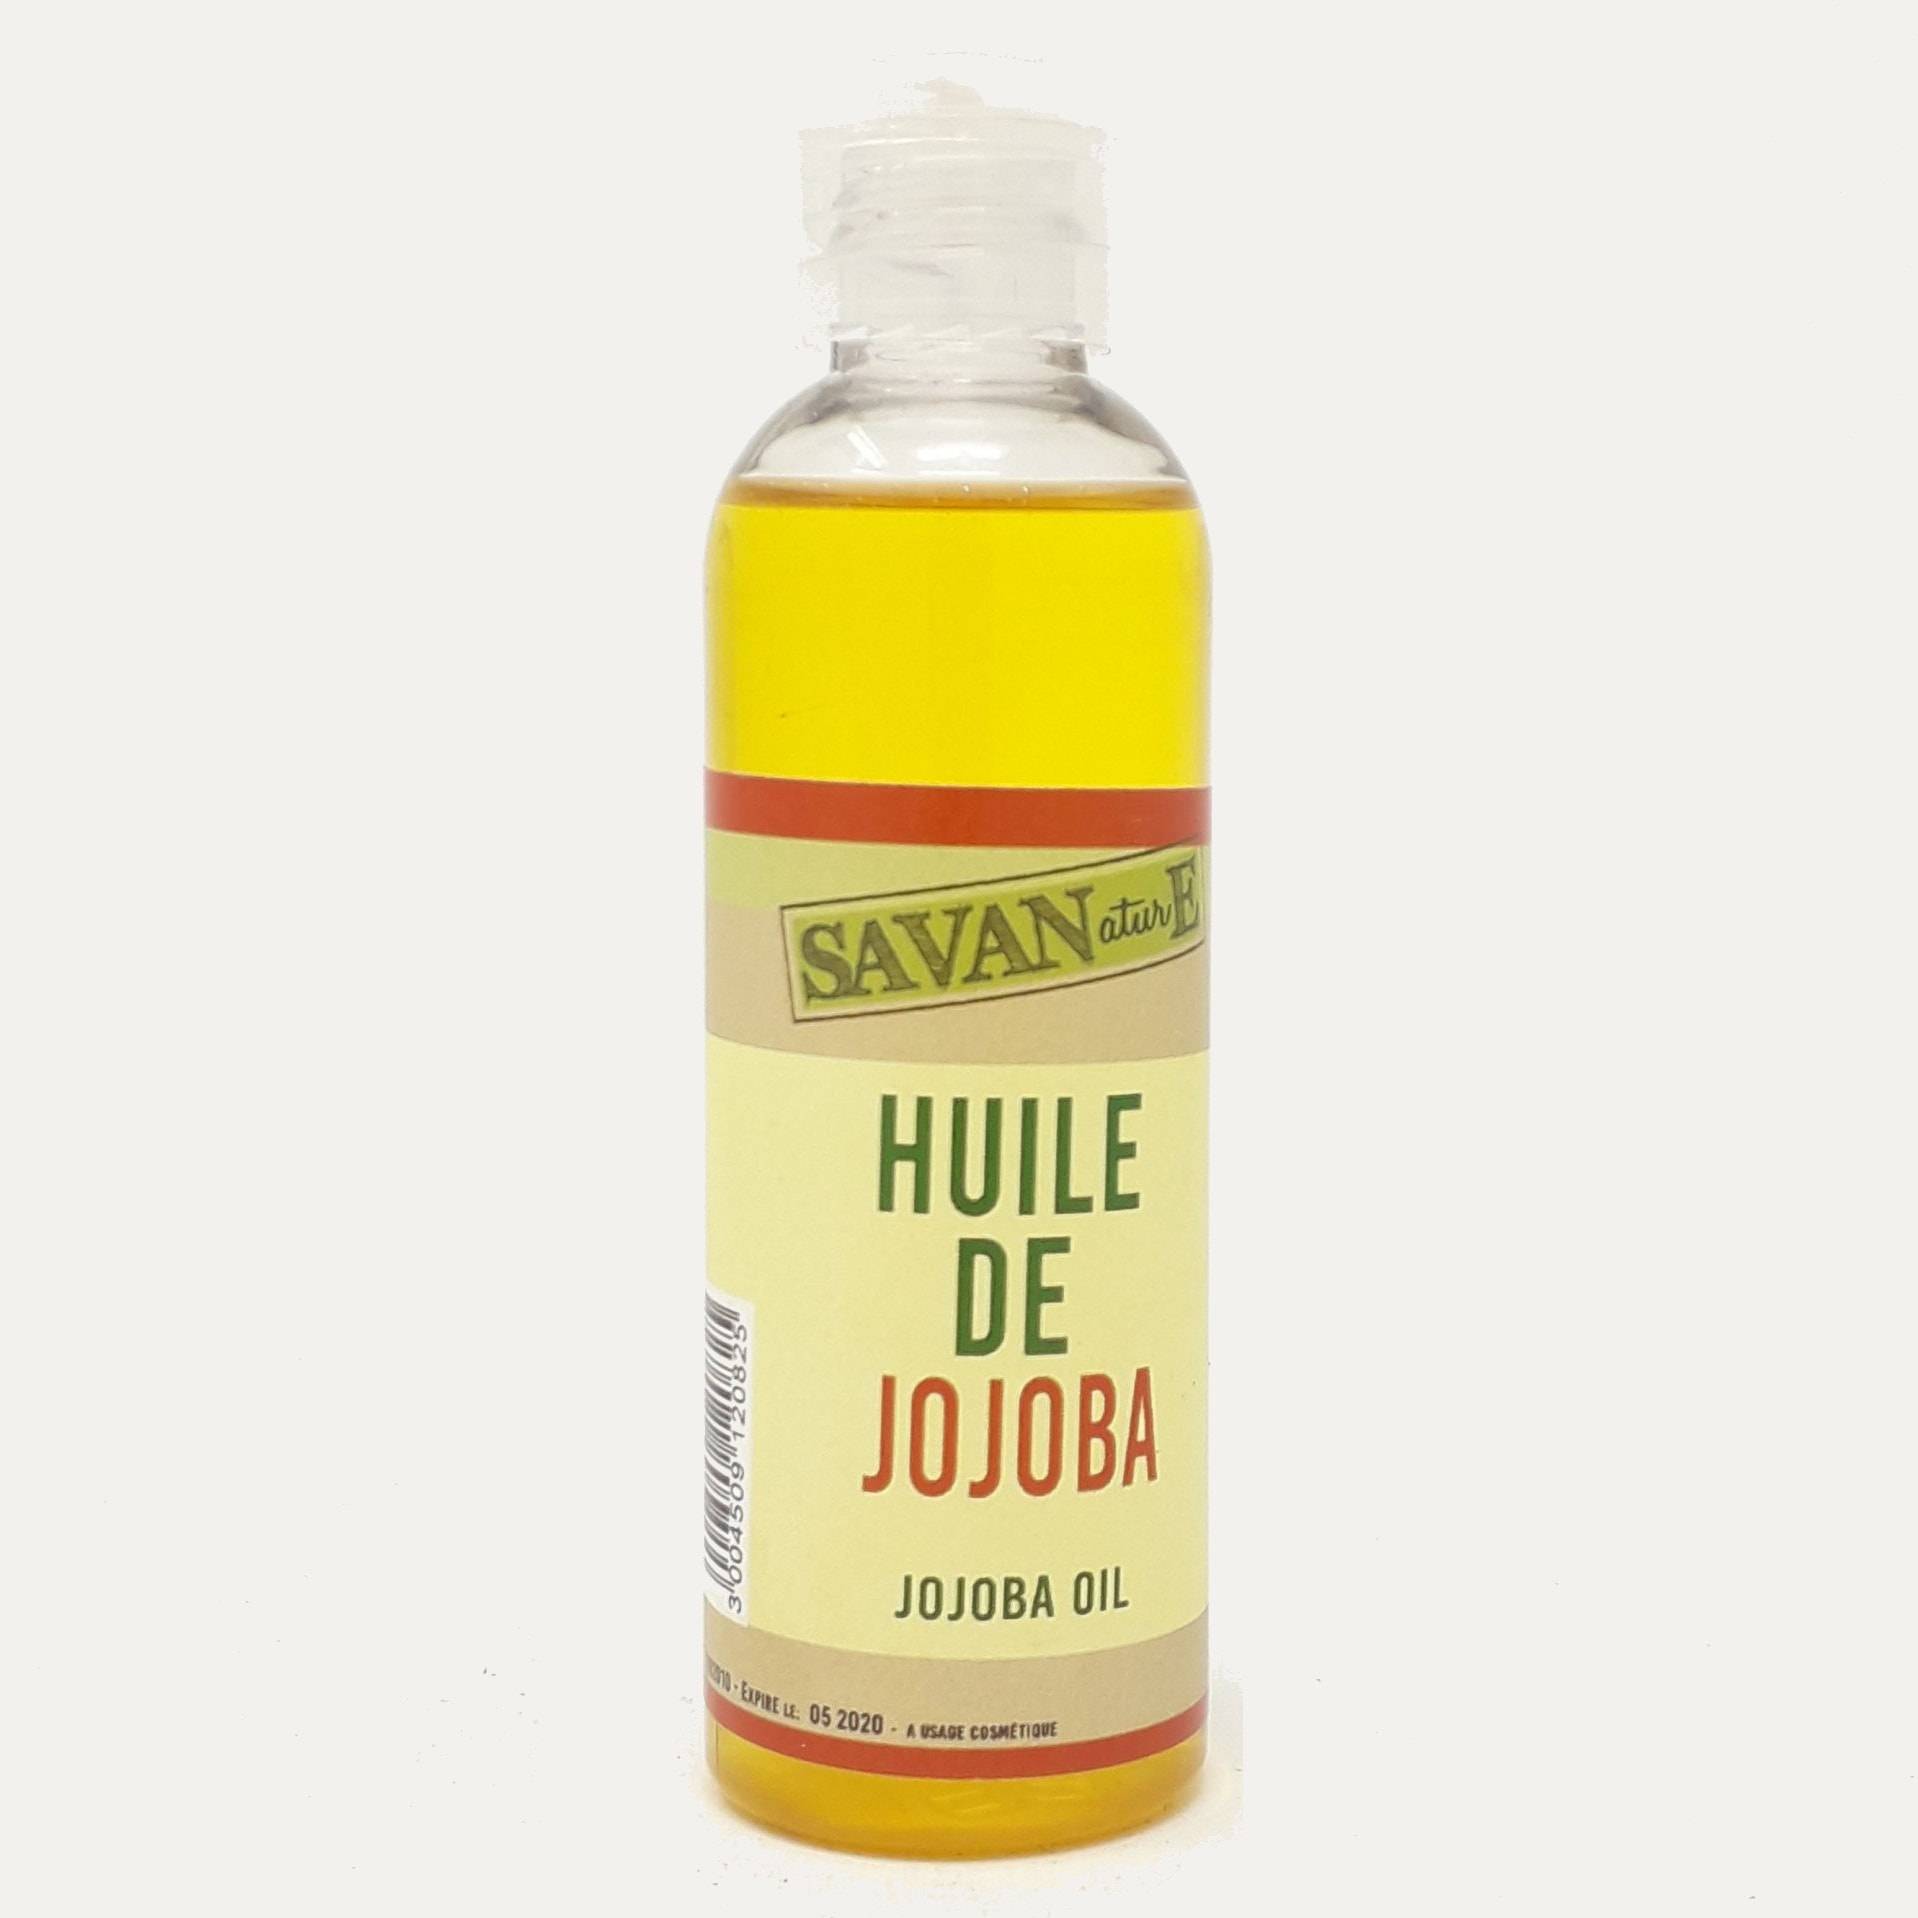 savanature huile de jojoba